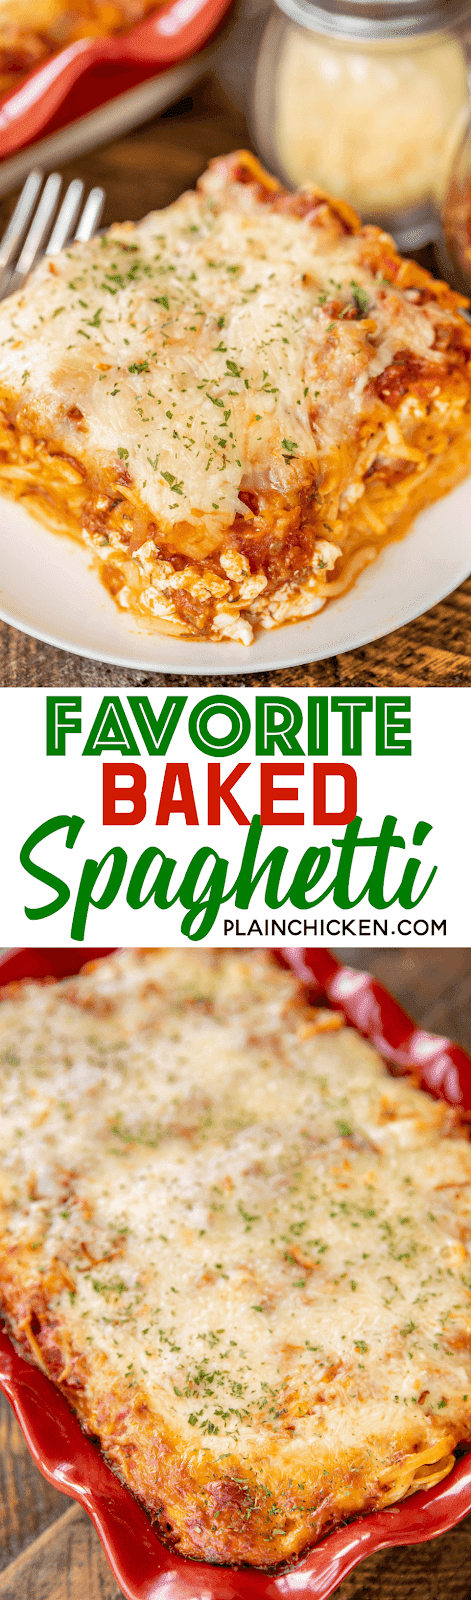 Favorite Baked Spaghetti Plain Chicken